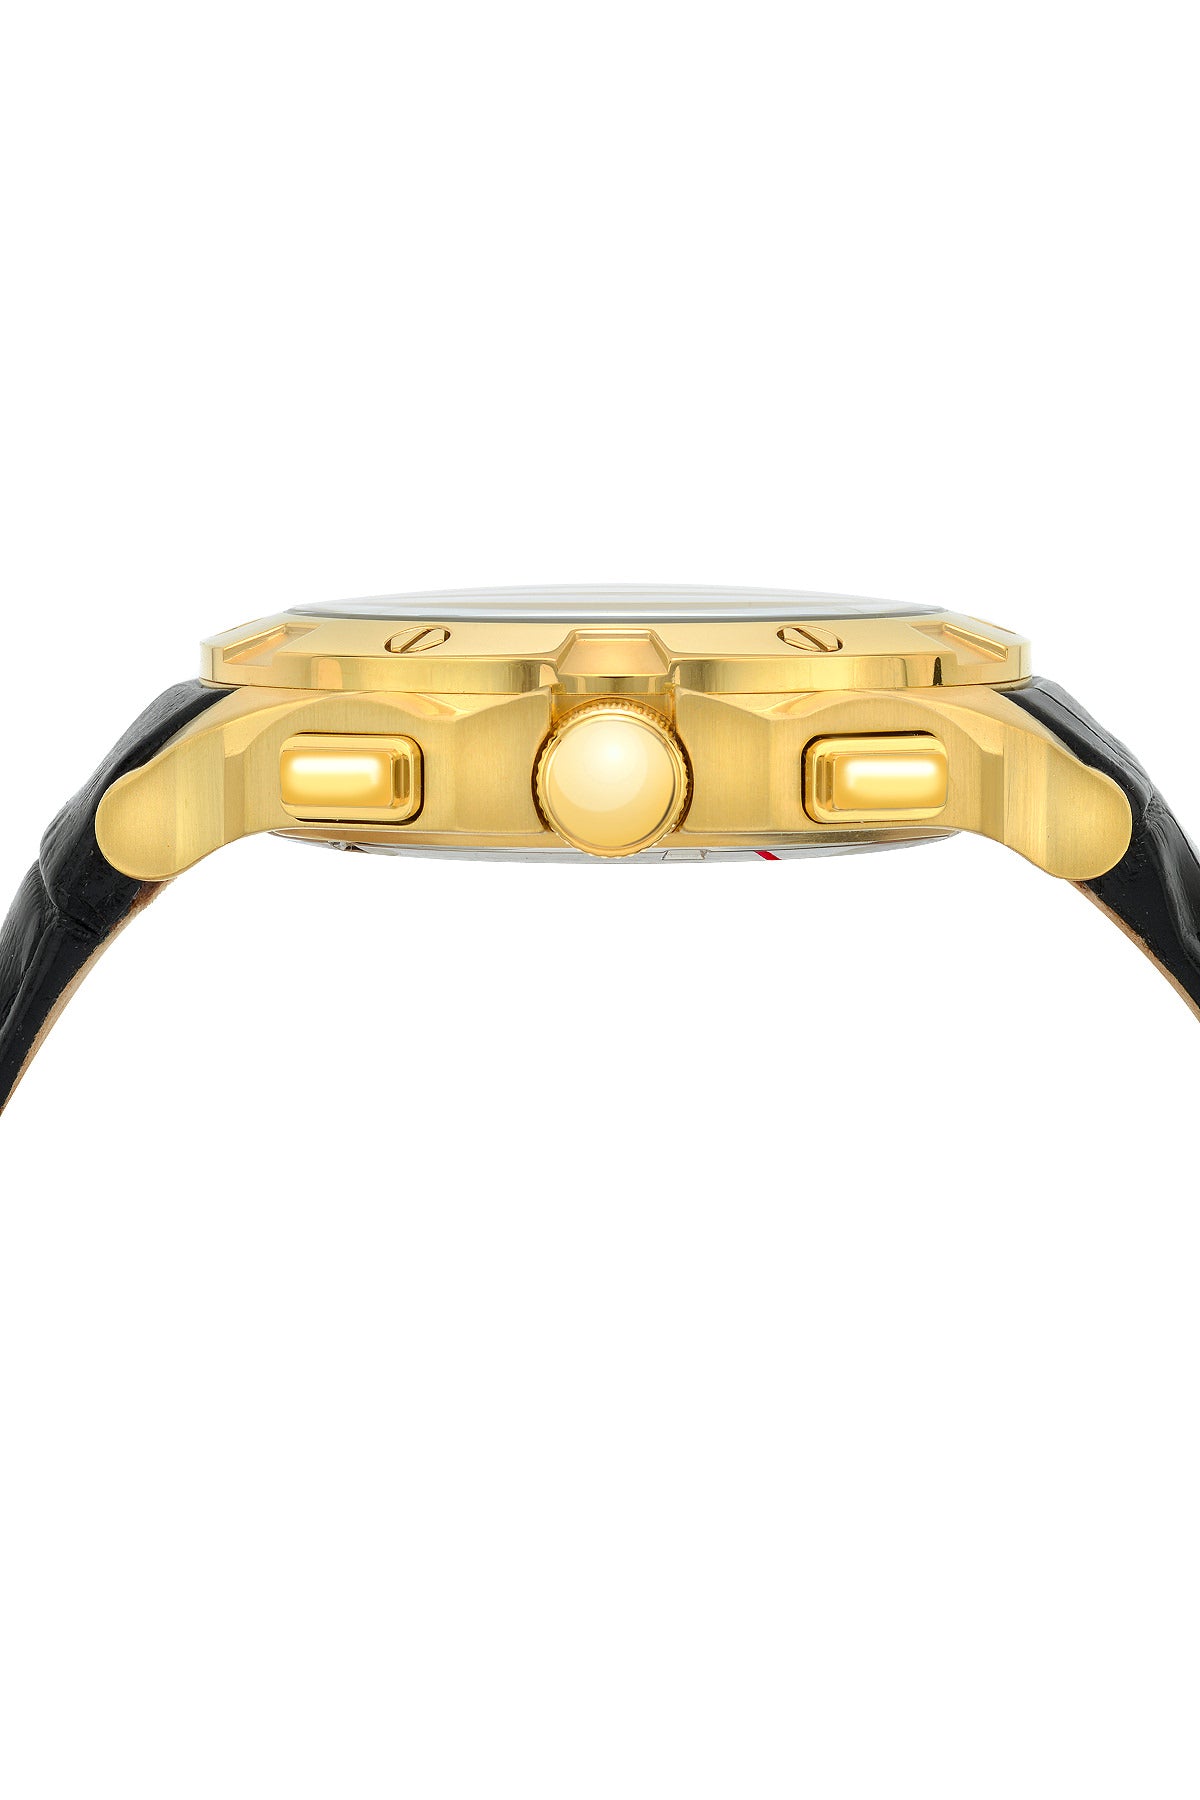 Porsamo Bleu George luxury chronograph men's watch, genuine leather band, gold, black 341DGEL